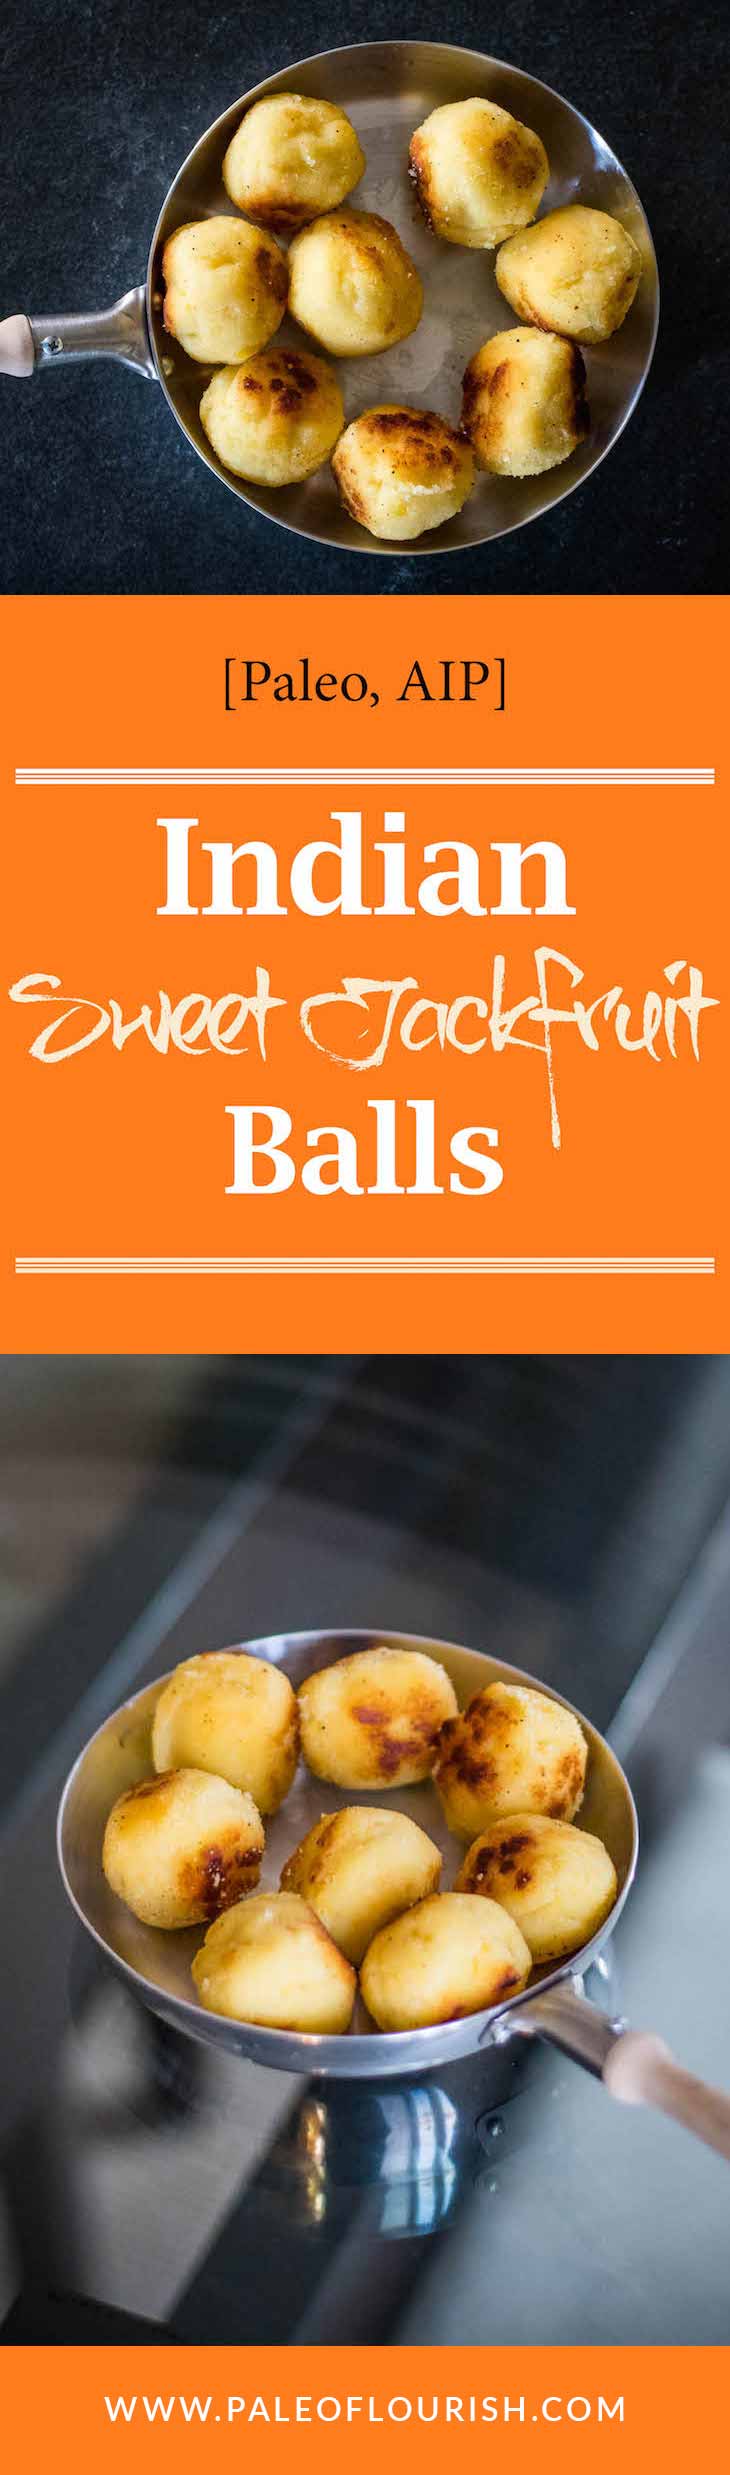 Indian sweet jackfruit balls dessert #paleo #dessert #jackfruit #recipe https://paleoflourish.com/indian-sweet-jackfruit-recipe